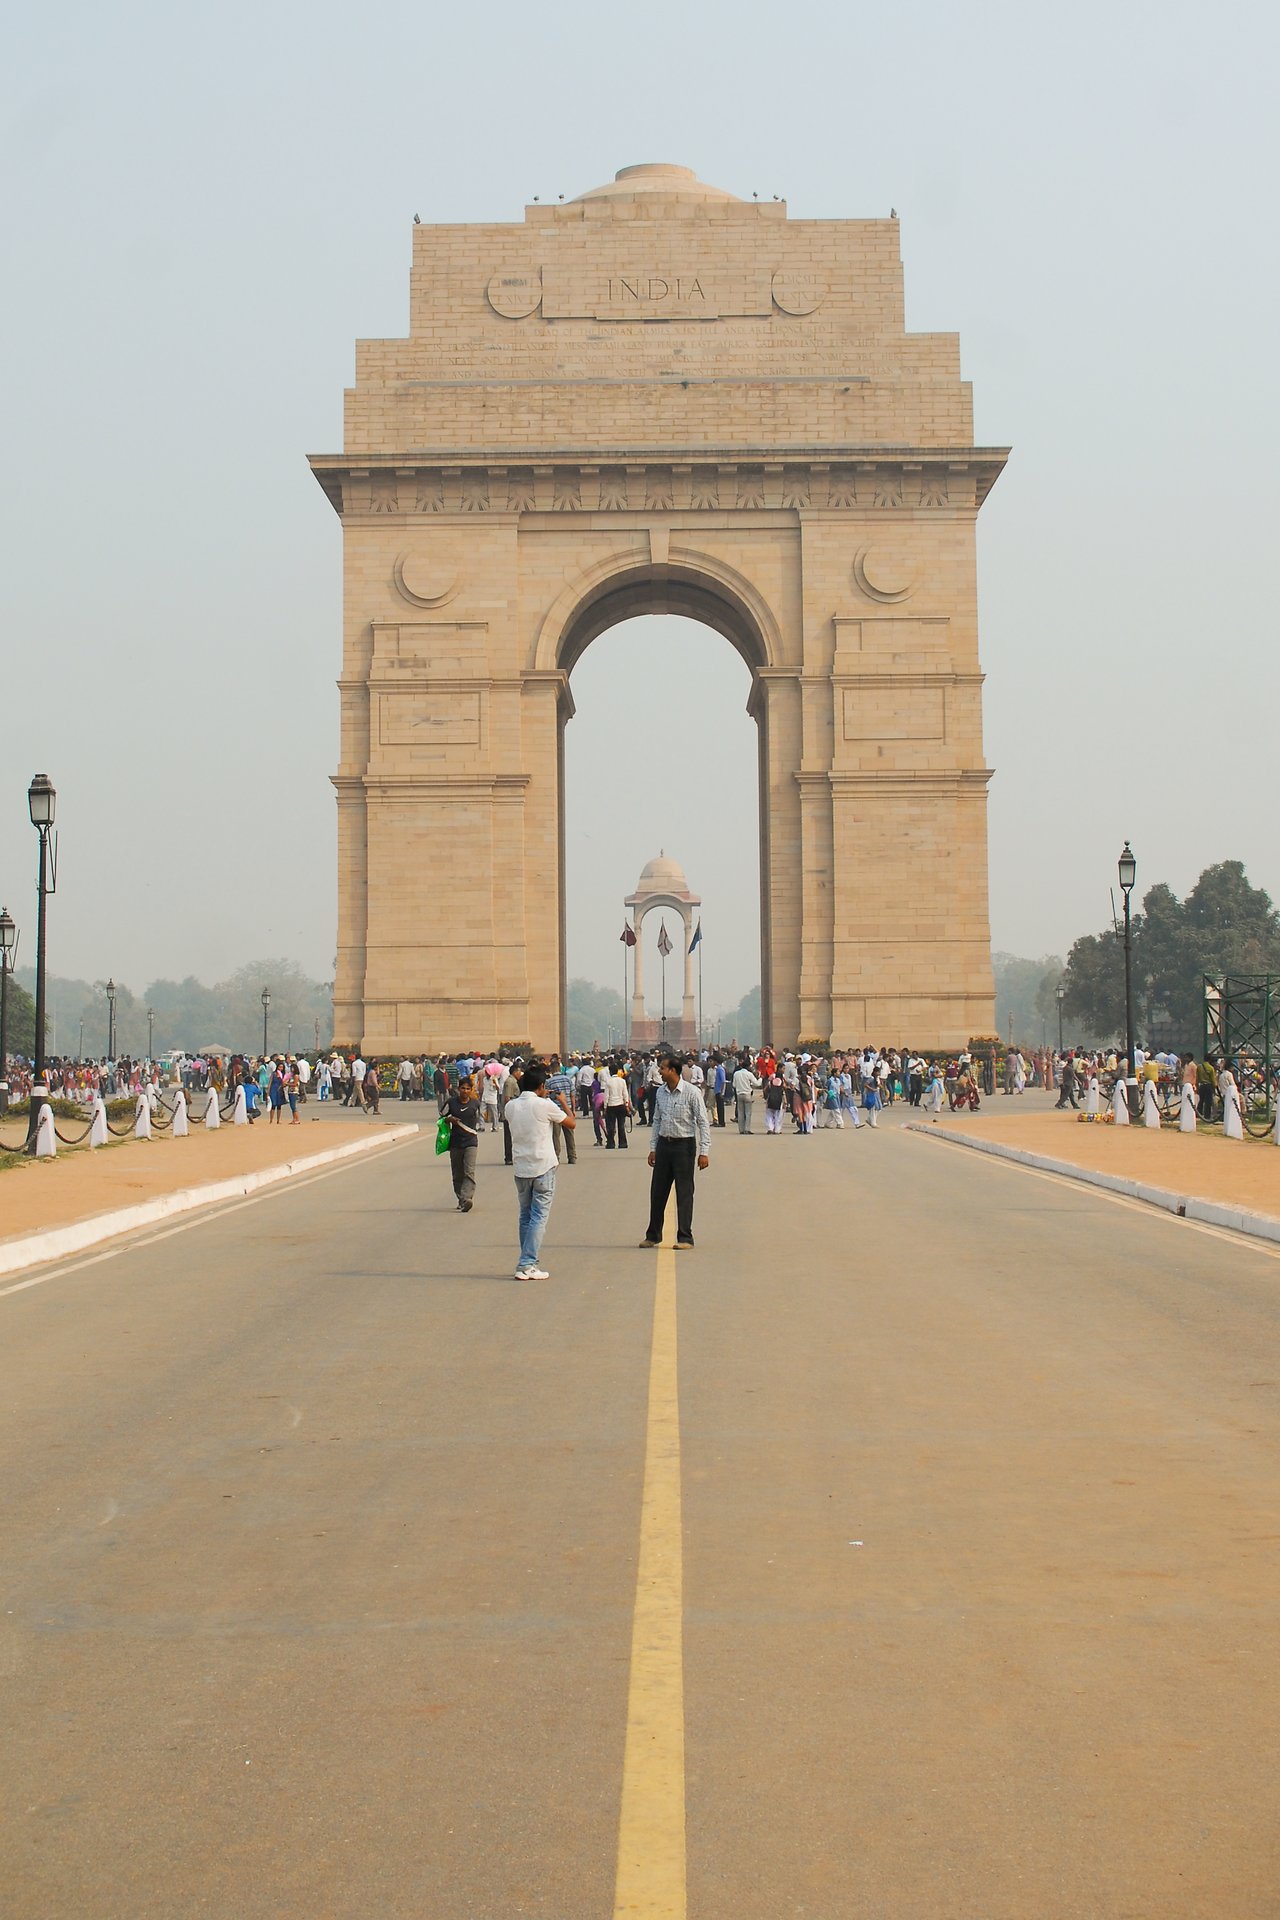 India gate in new delhi